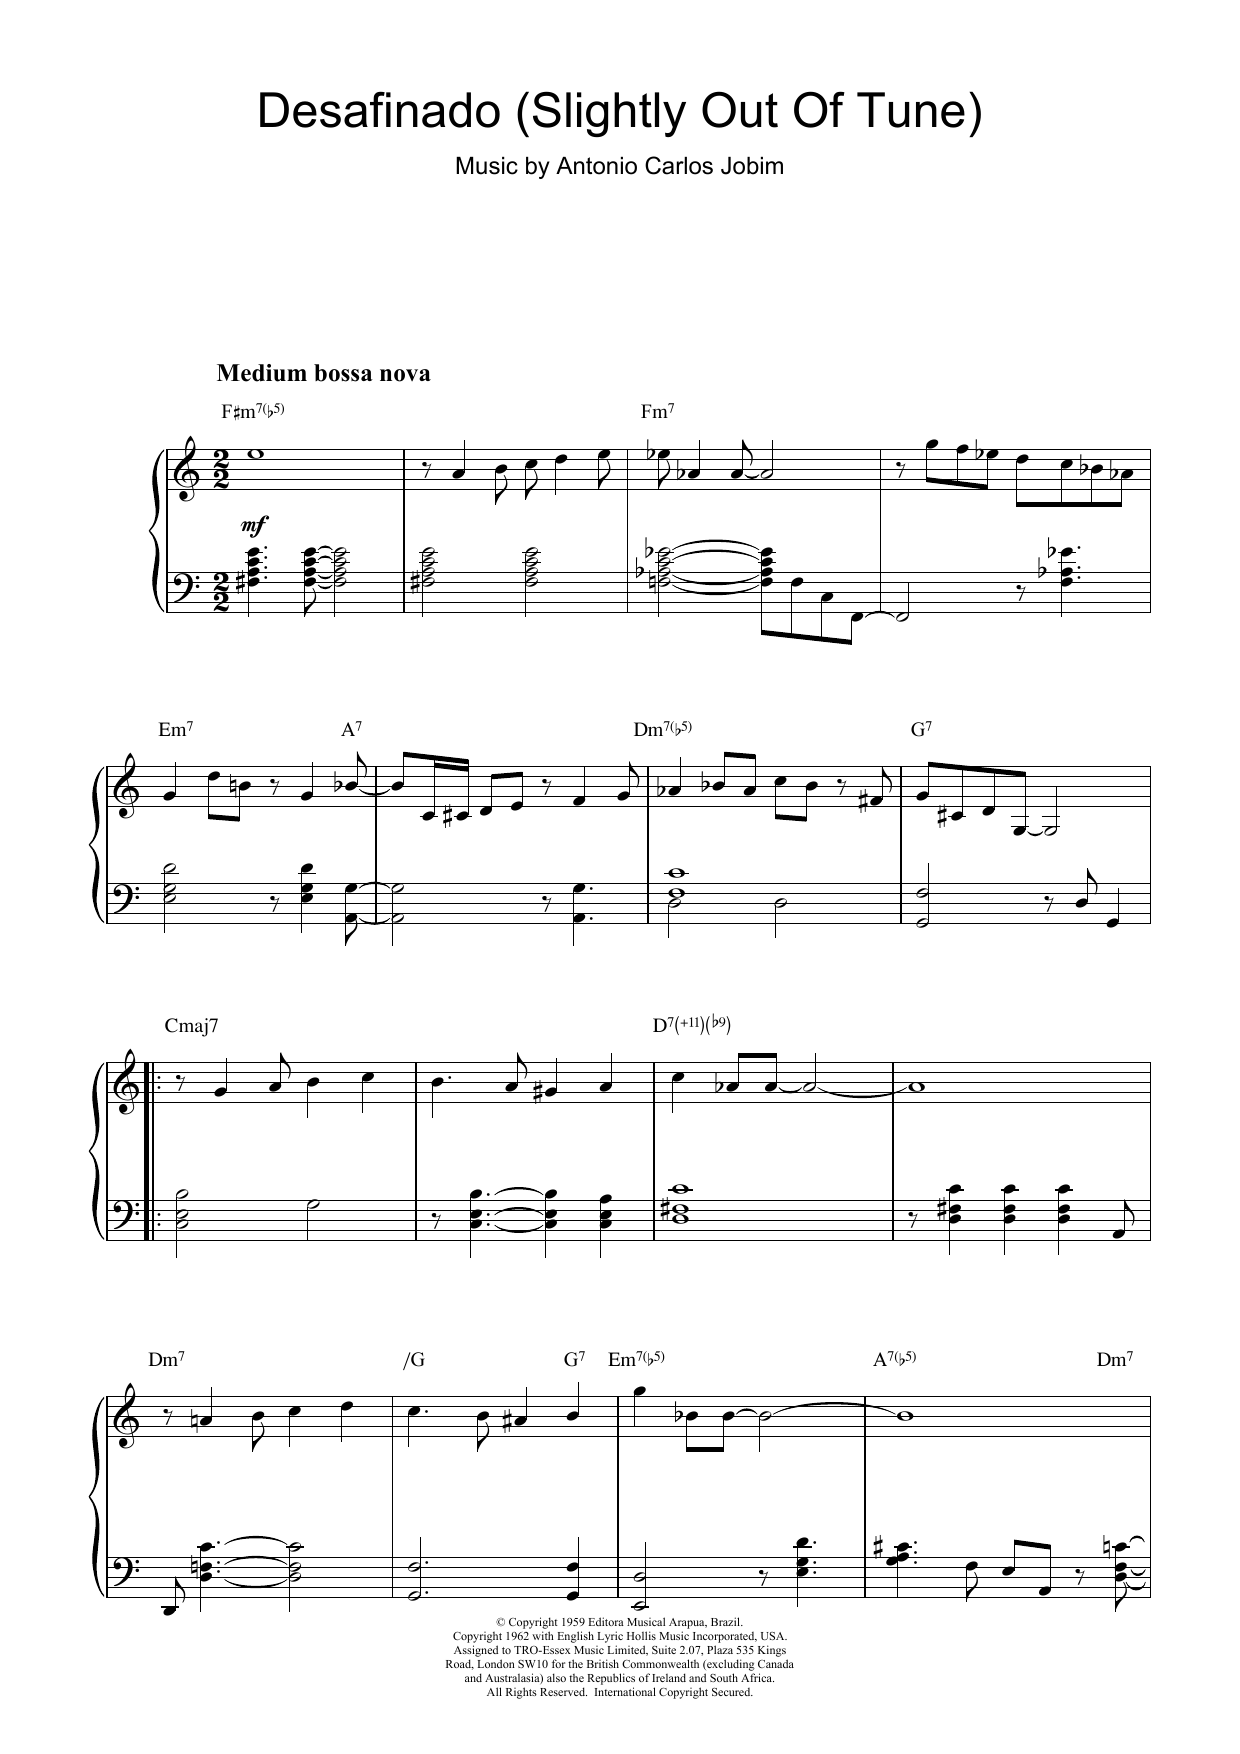 Antonio Carlos Jobim Desafinado (Slightly Out Of Tune) Sheet Music Notes & Chords for Keyboard - Download or Print PDF